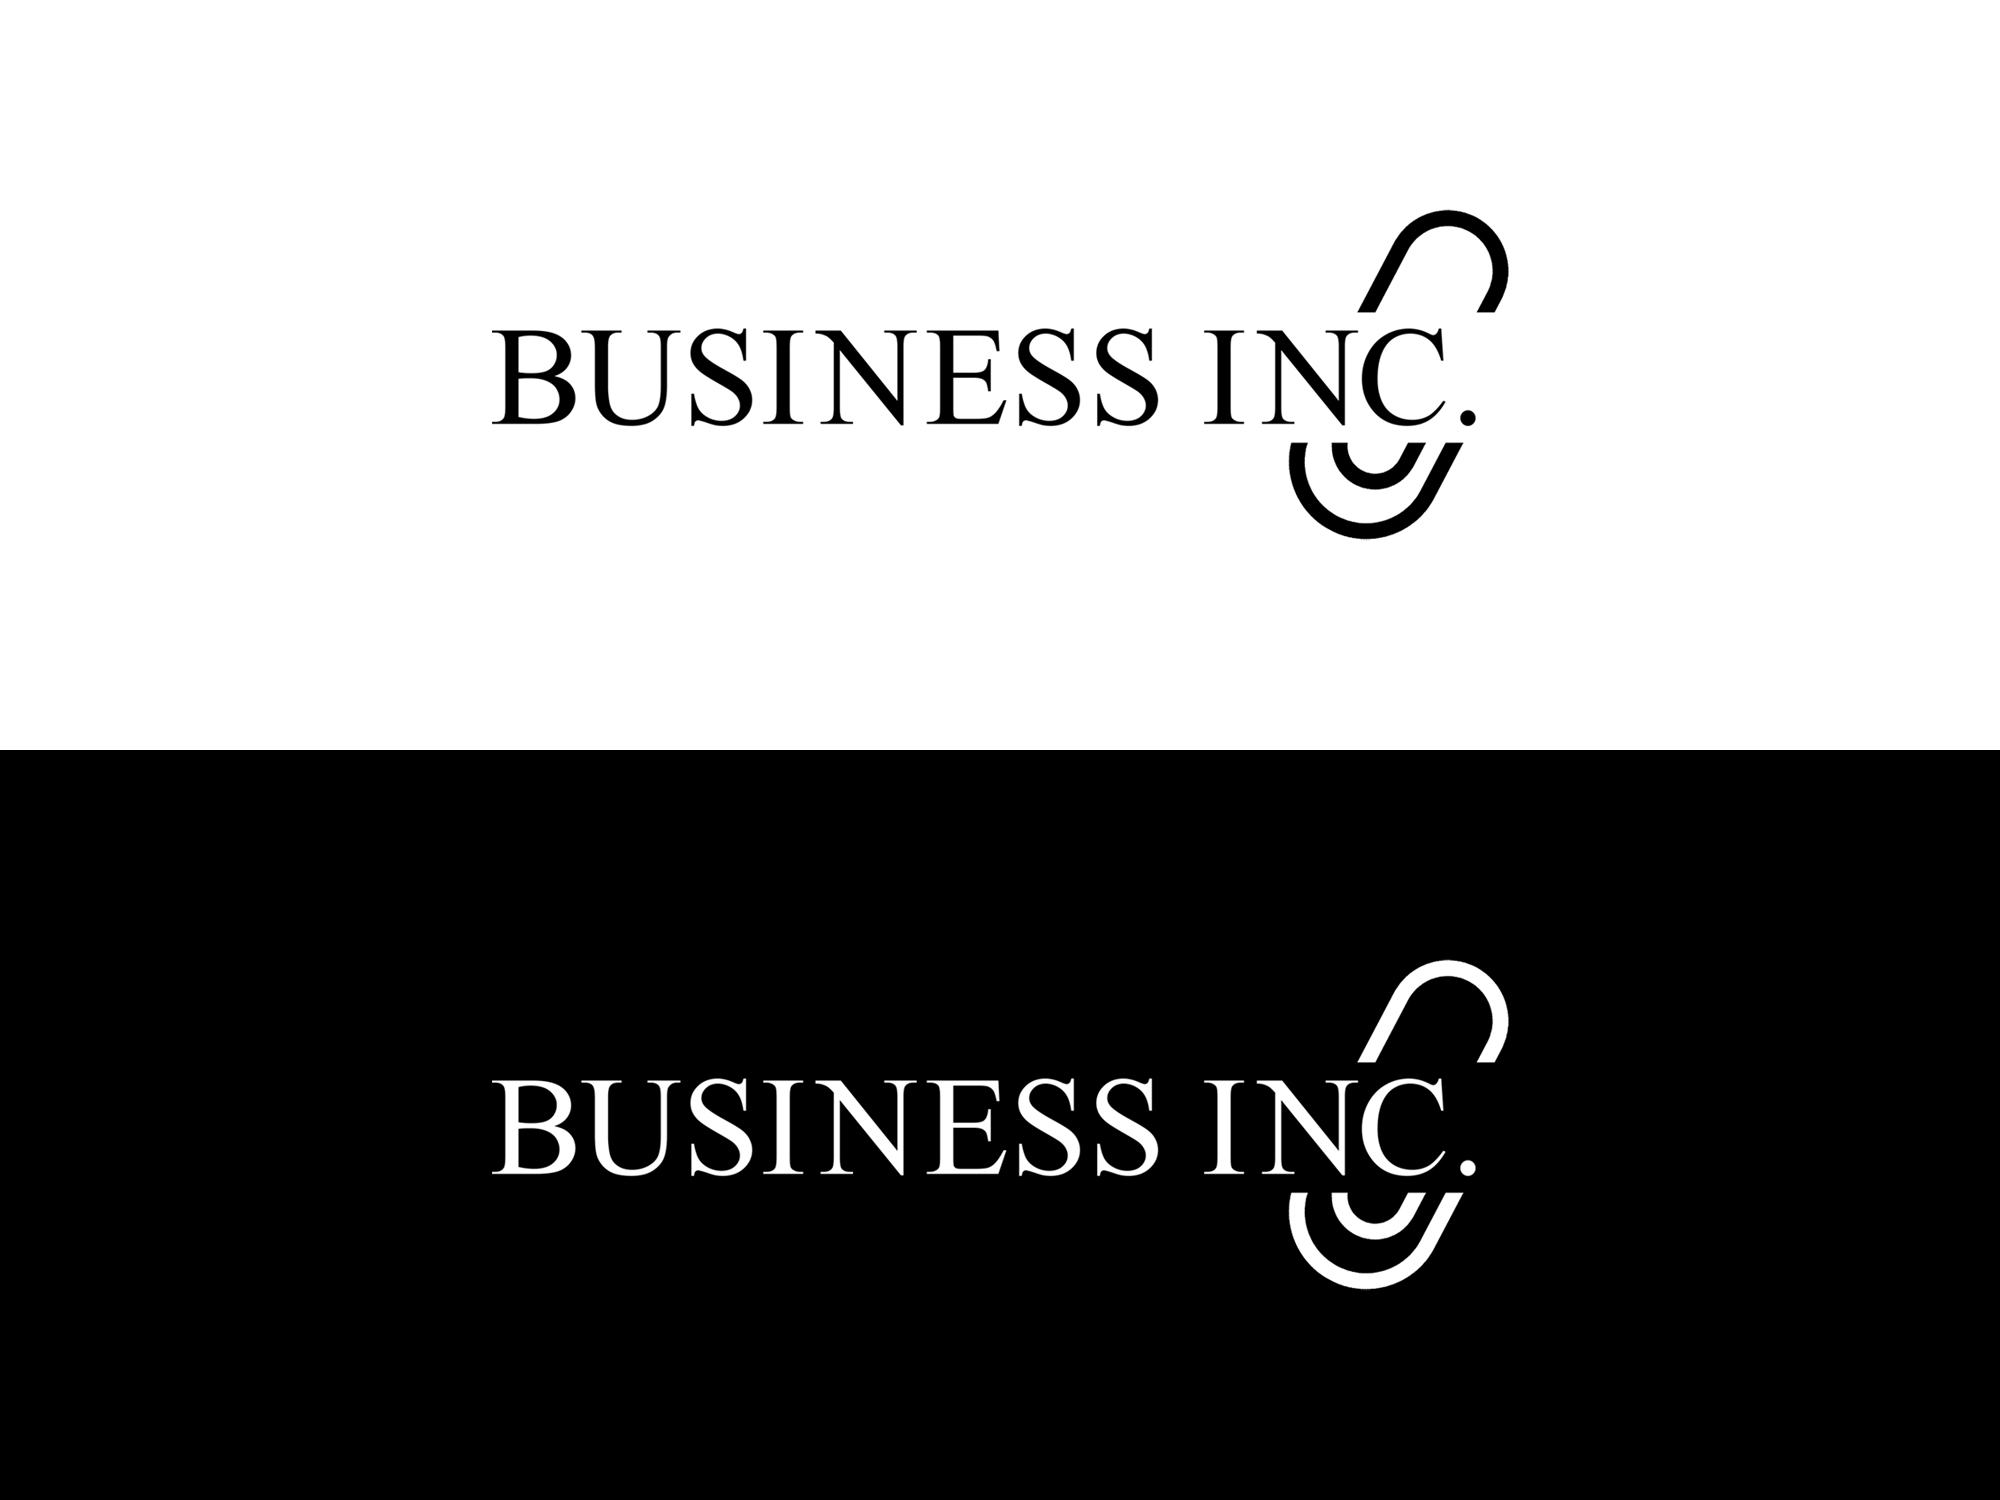 194-cbn-logo---business-inc-black-and-white.jpg